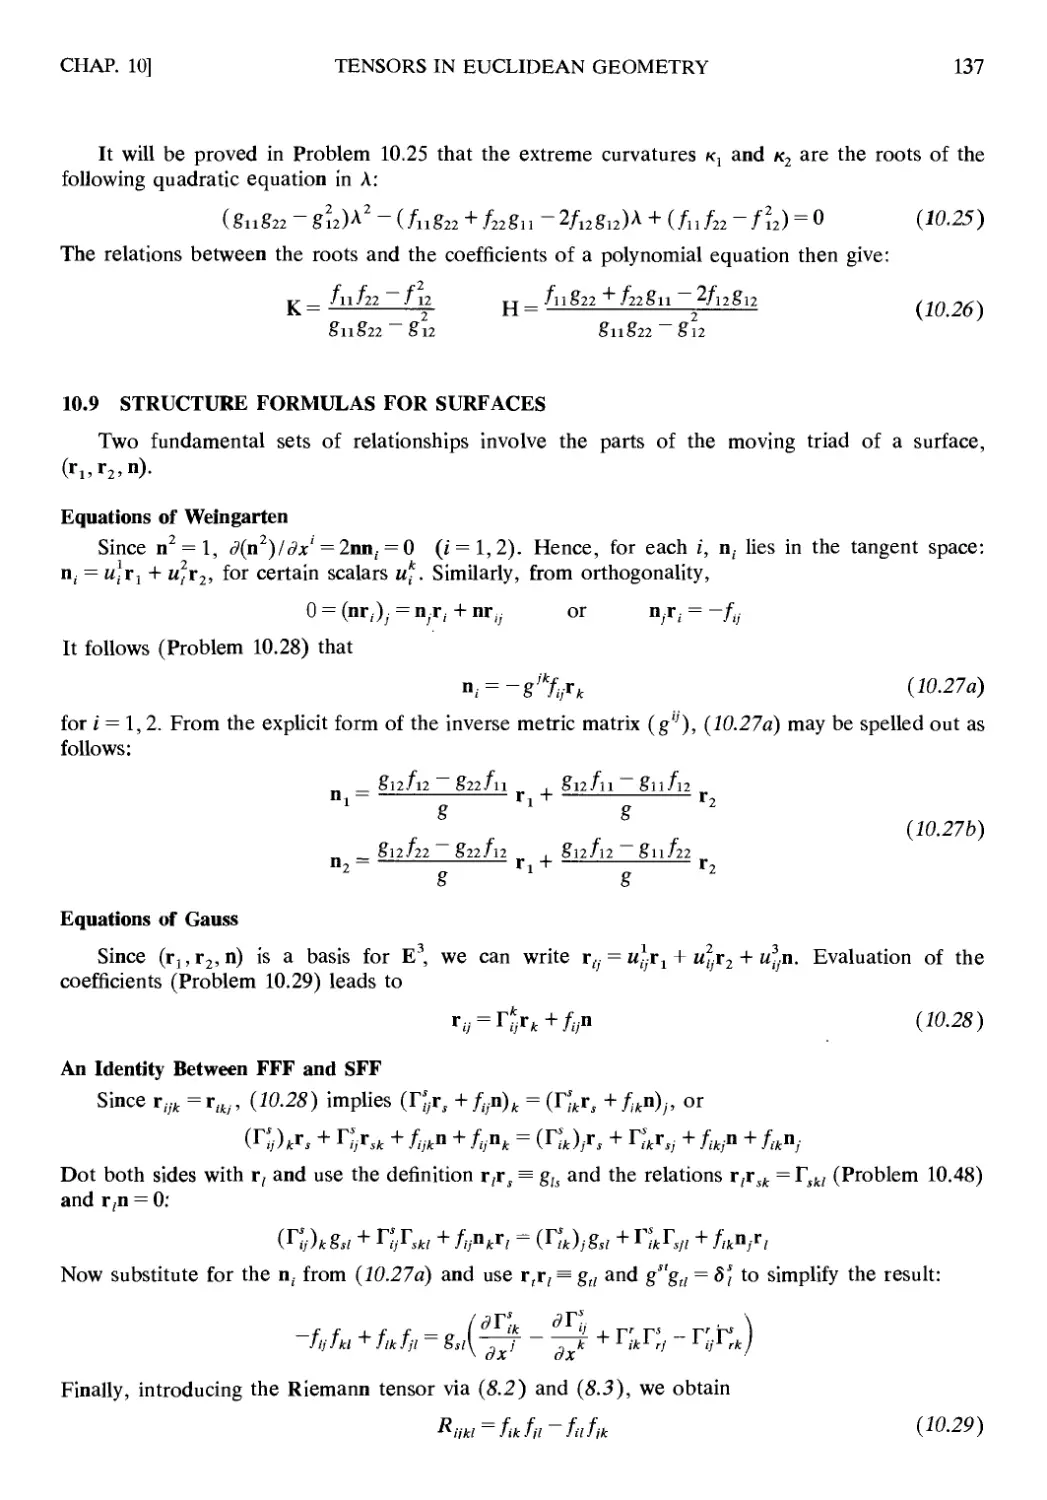 10.9 Structure Formulas for Surfaces